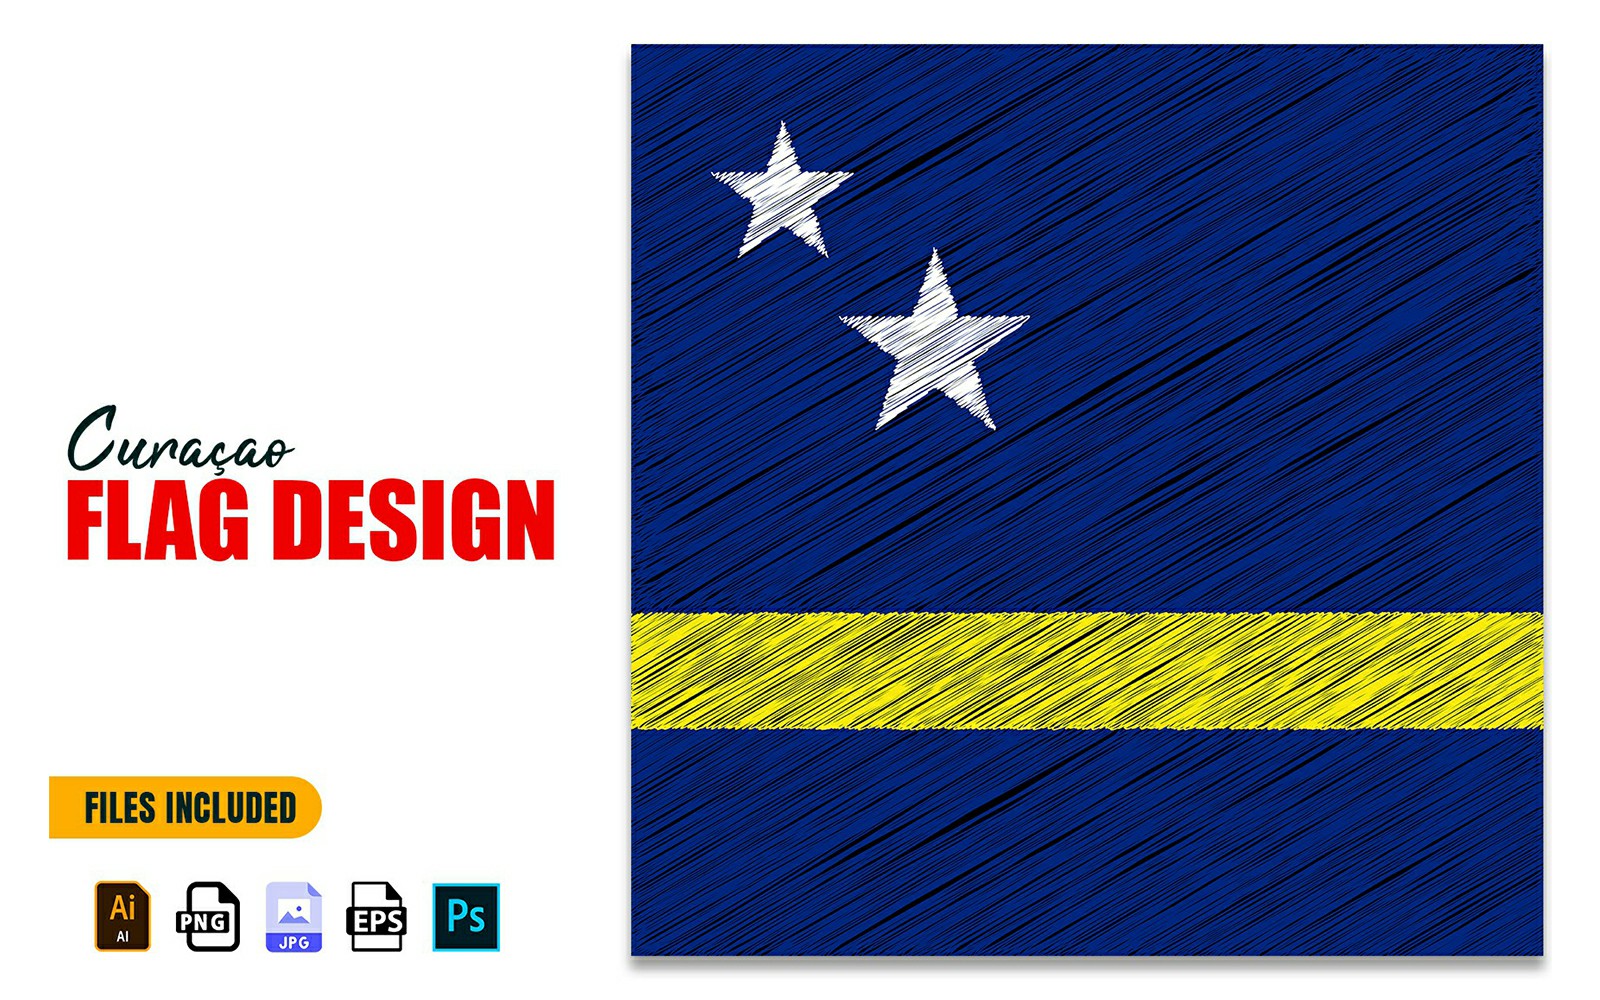 10 October Curacao Independence Day Flag Design illustration